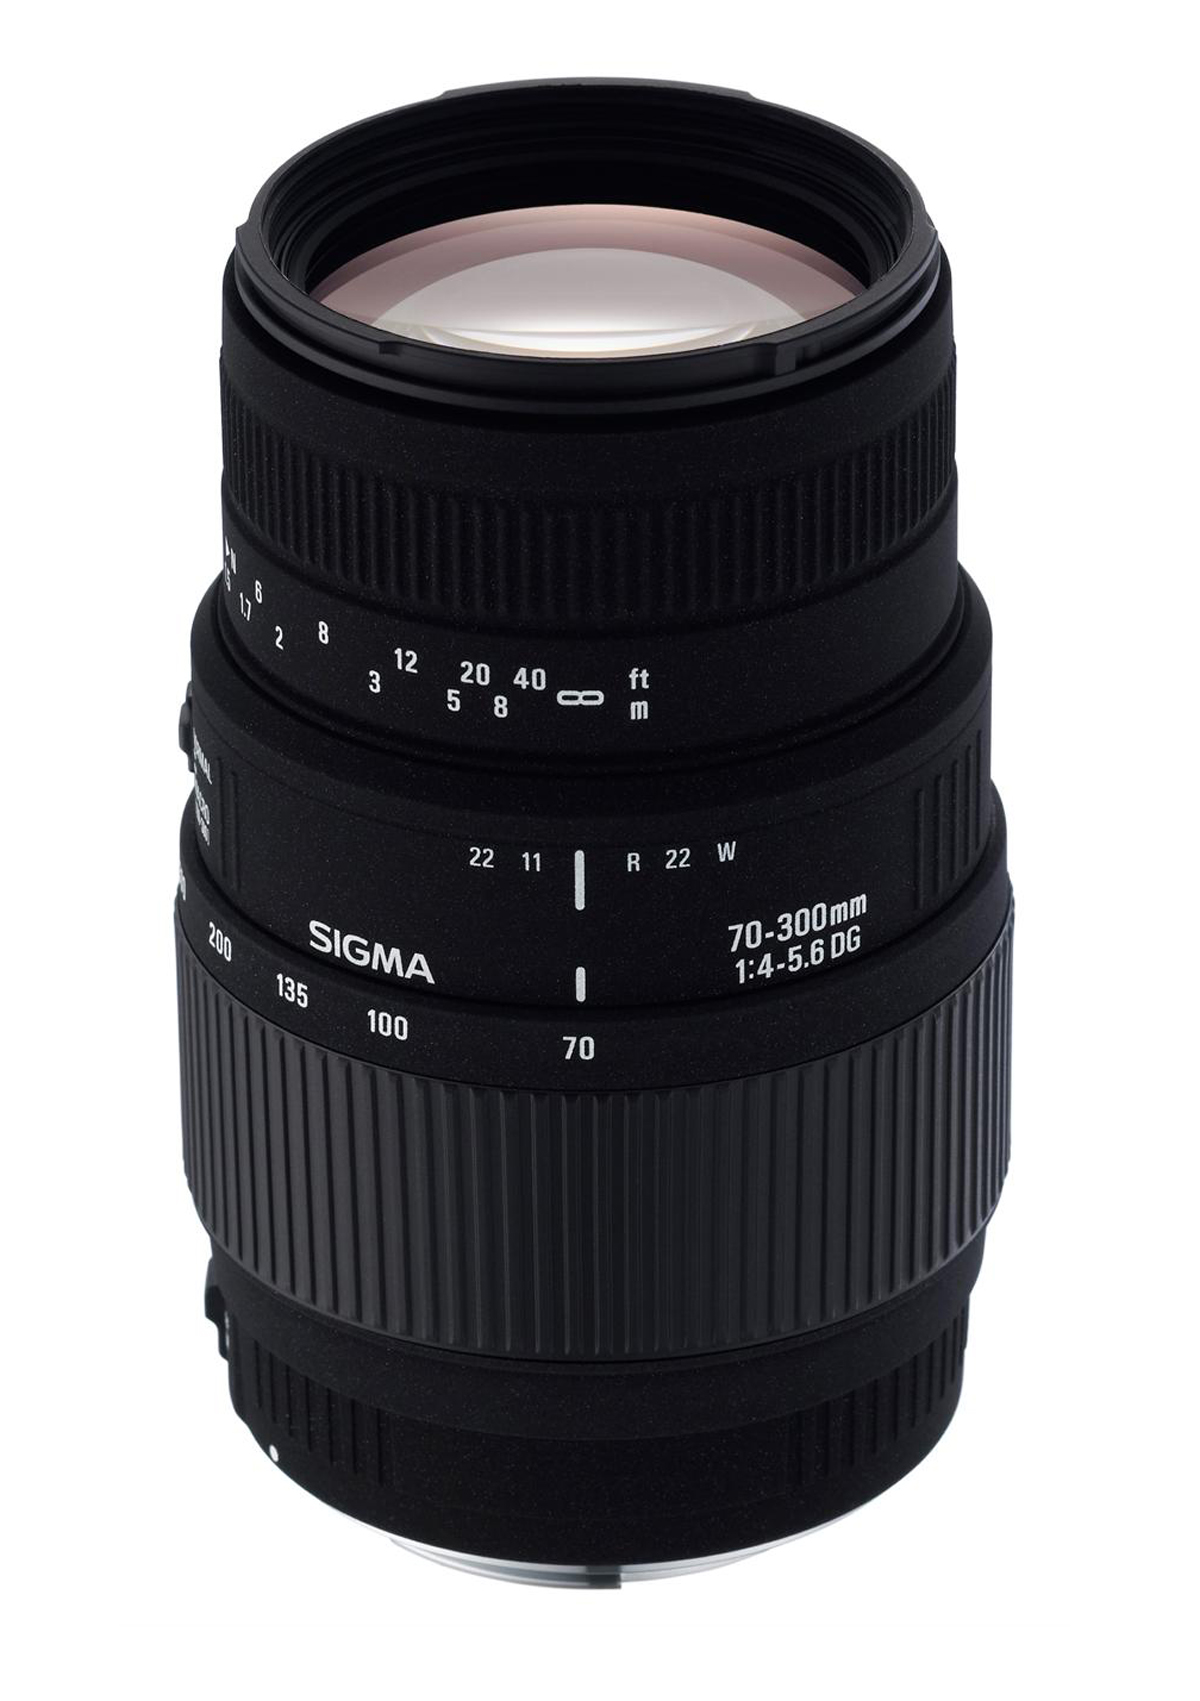 Sigma Macro Lens 70 300mm For Nikon Cameras